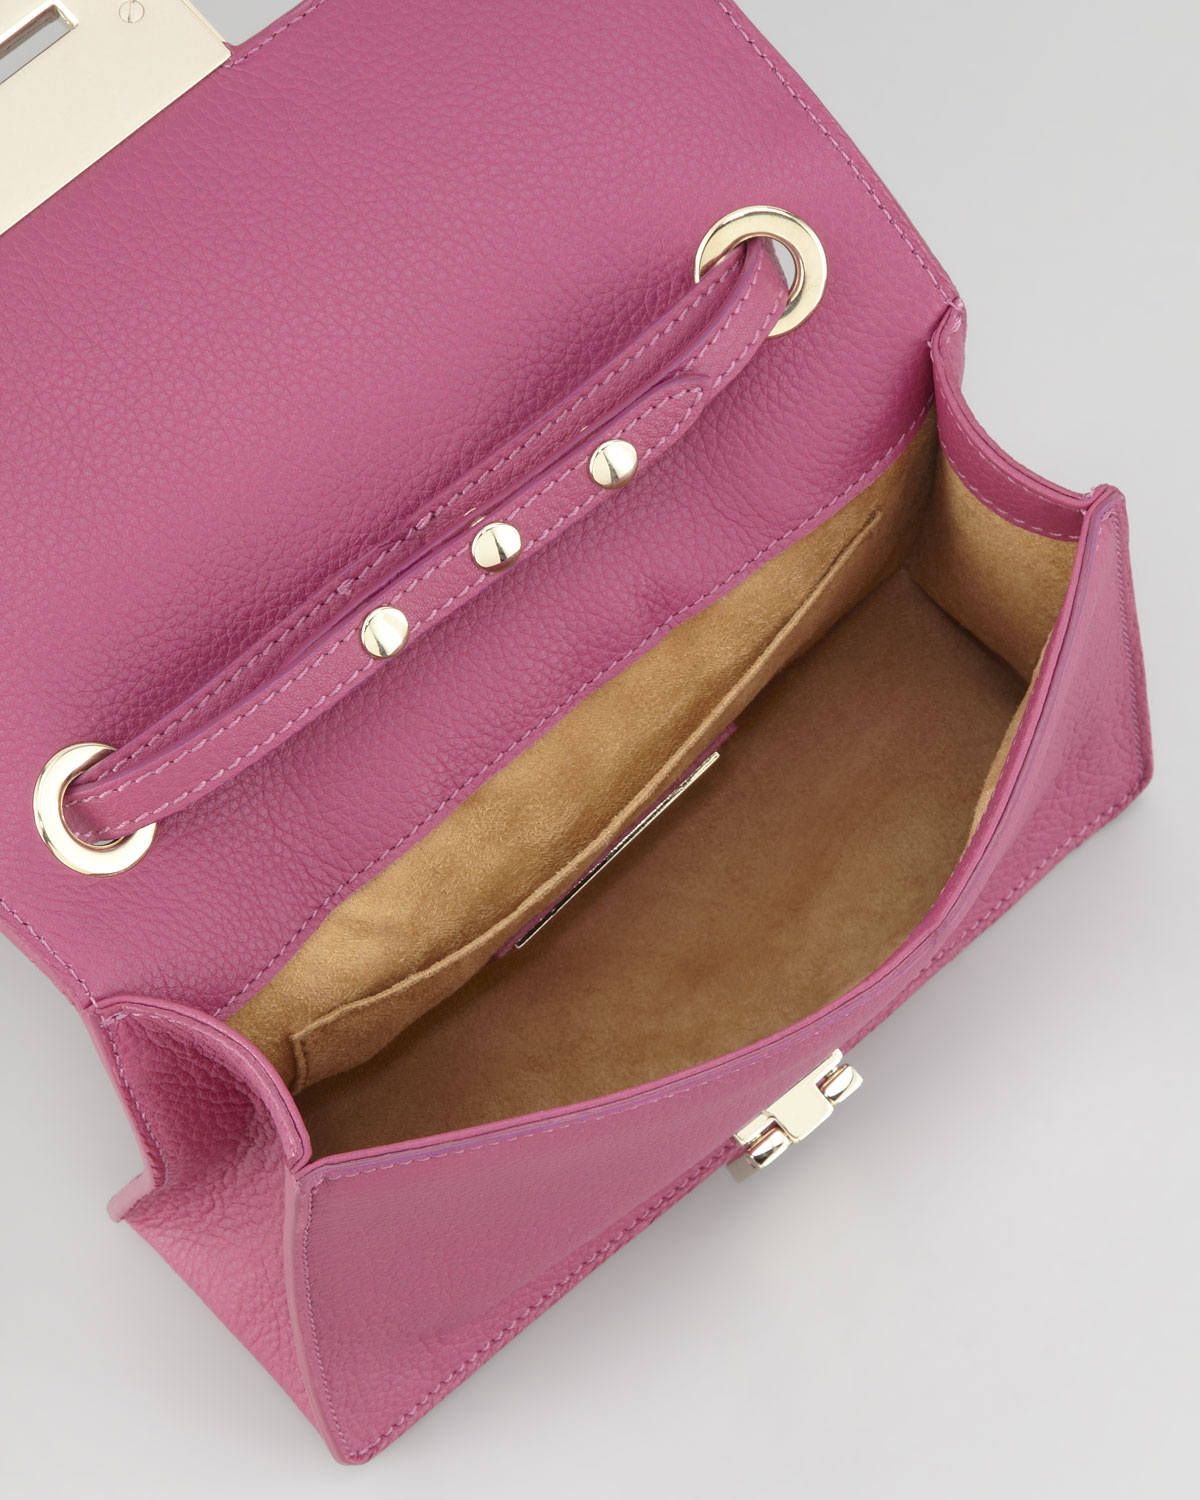 Lyst - Jimmy Choo Rebel Leather Crossbody Bag Purple in Pink